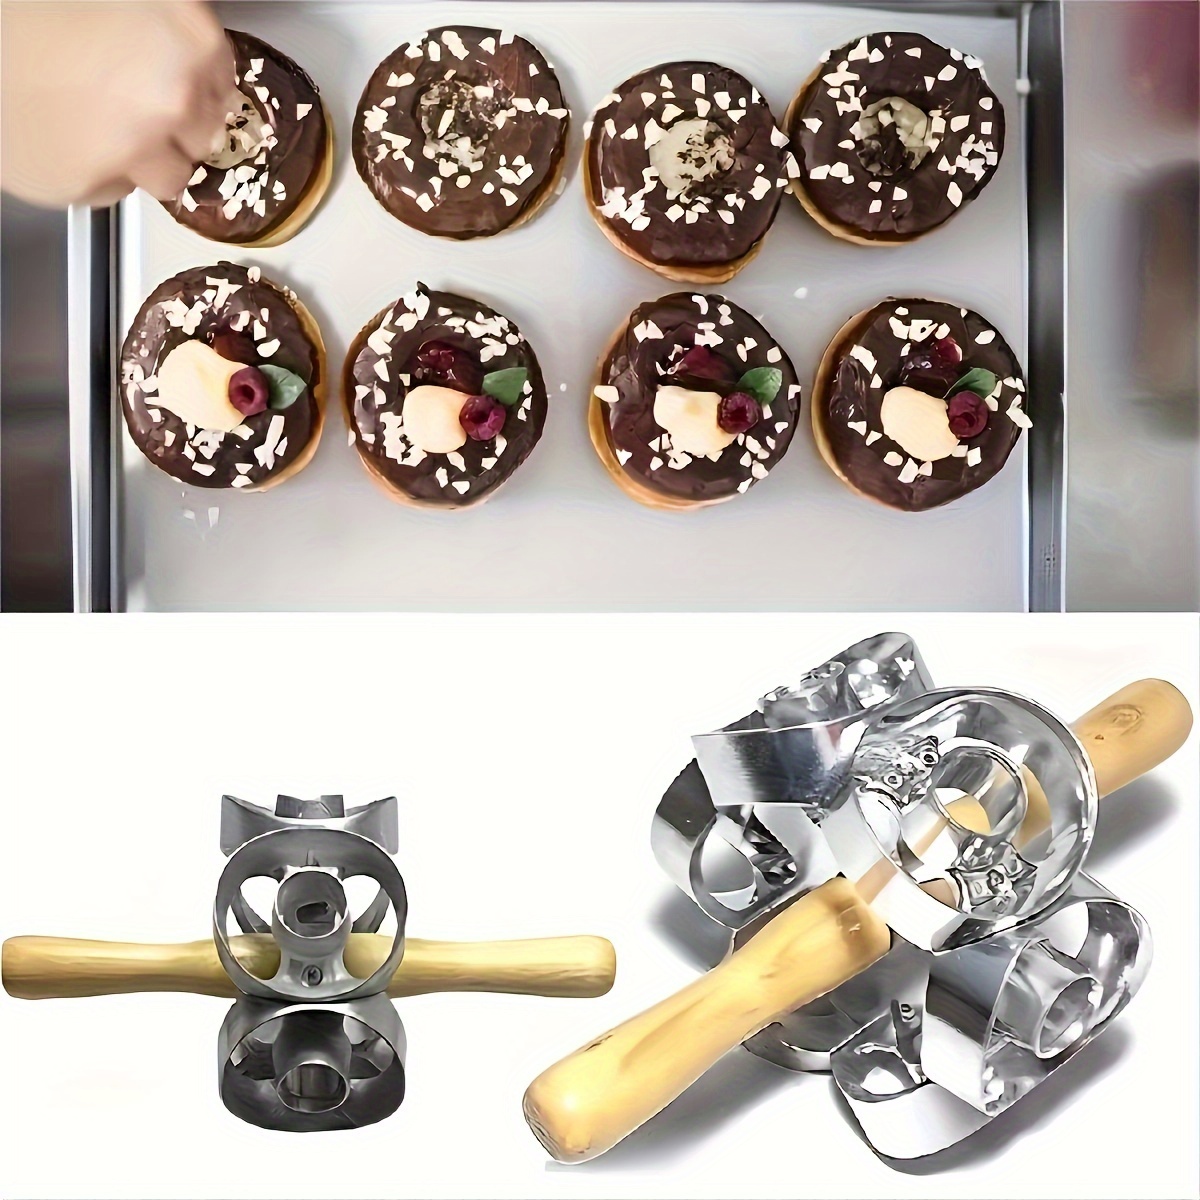 mini donut maker mini pancakes maker machine Double-sided heating 16 holes  maquina para hacer minidonas Portable donut maker with non-stick surface